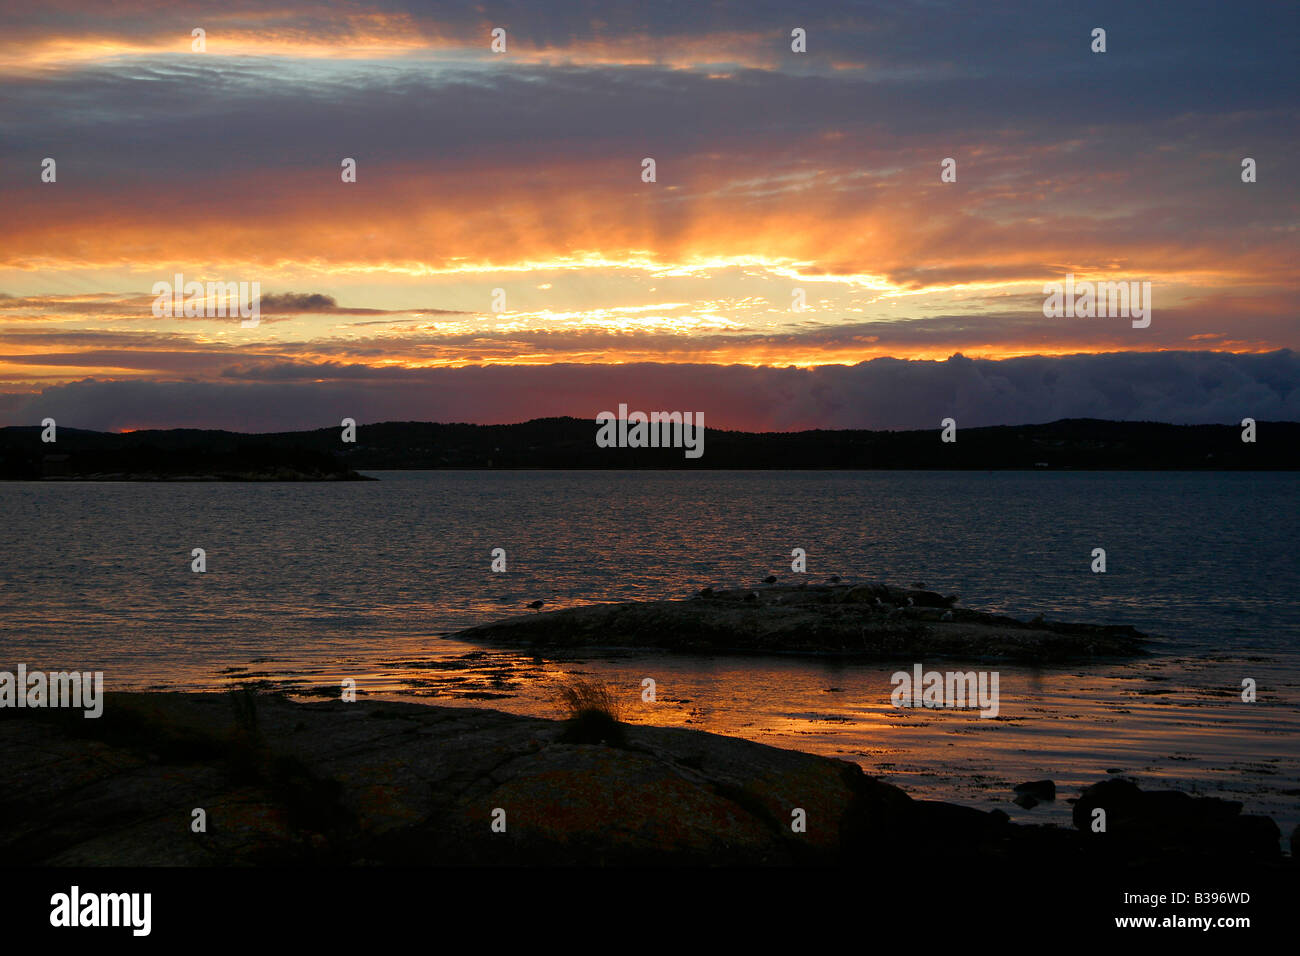 Norwegen, Sonnenuntergang vor der Insel Hitra, Norway sundown at Hitra island Stock Photo